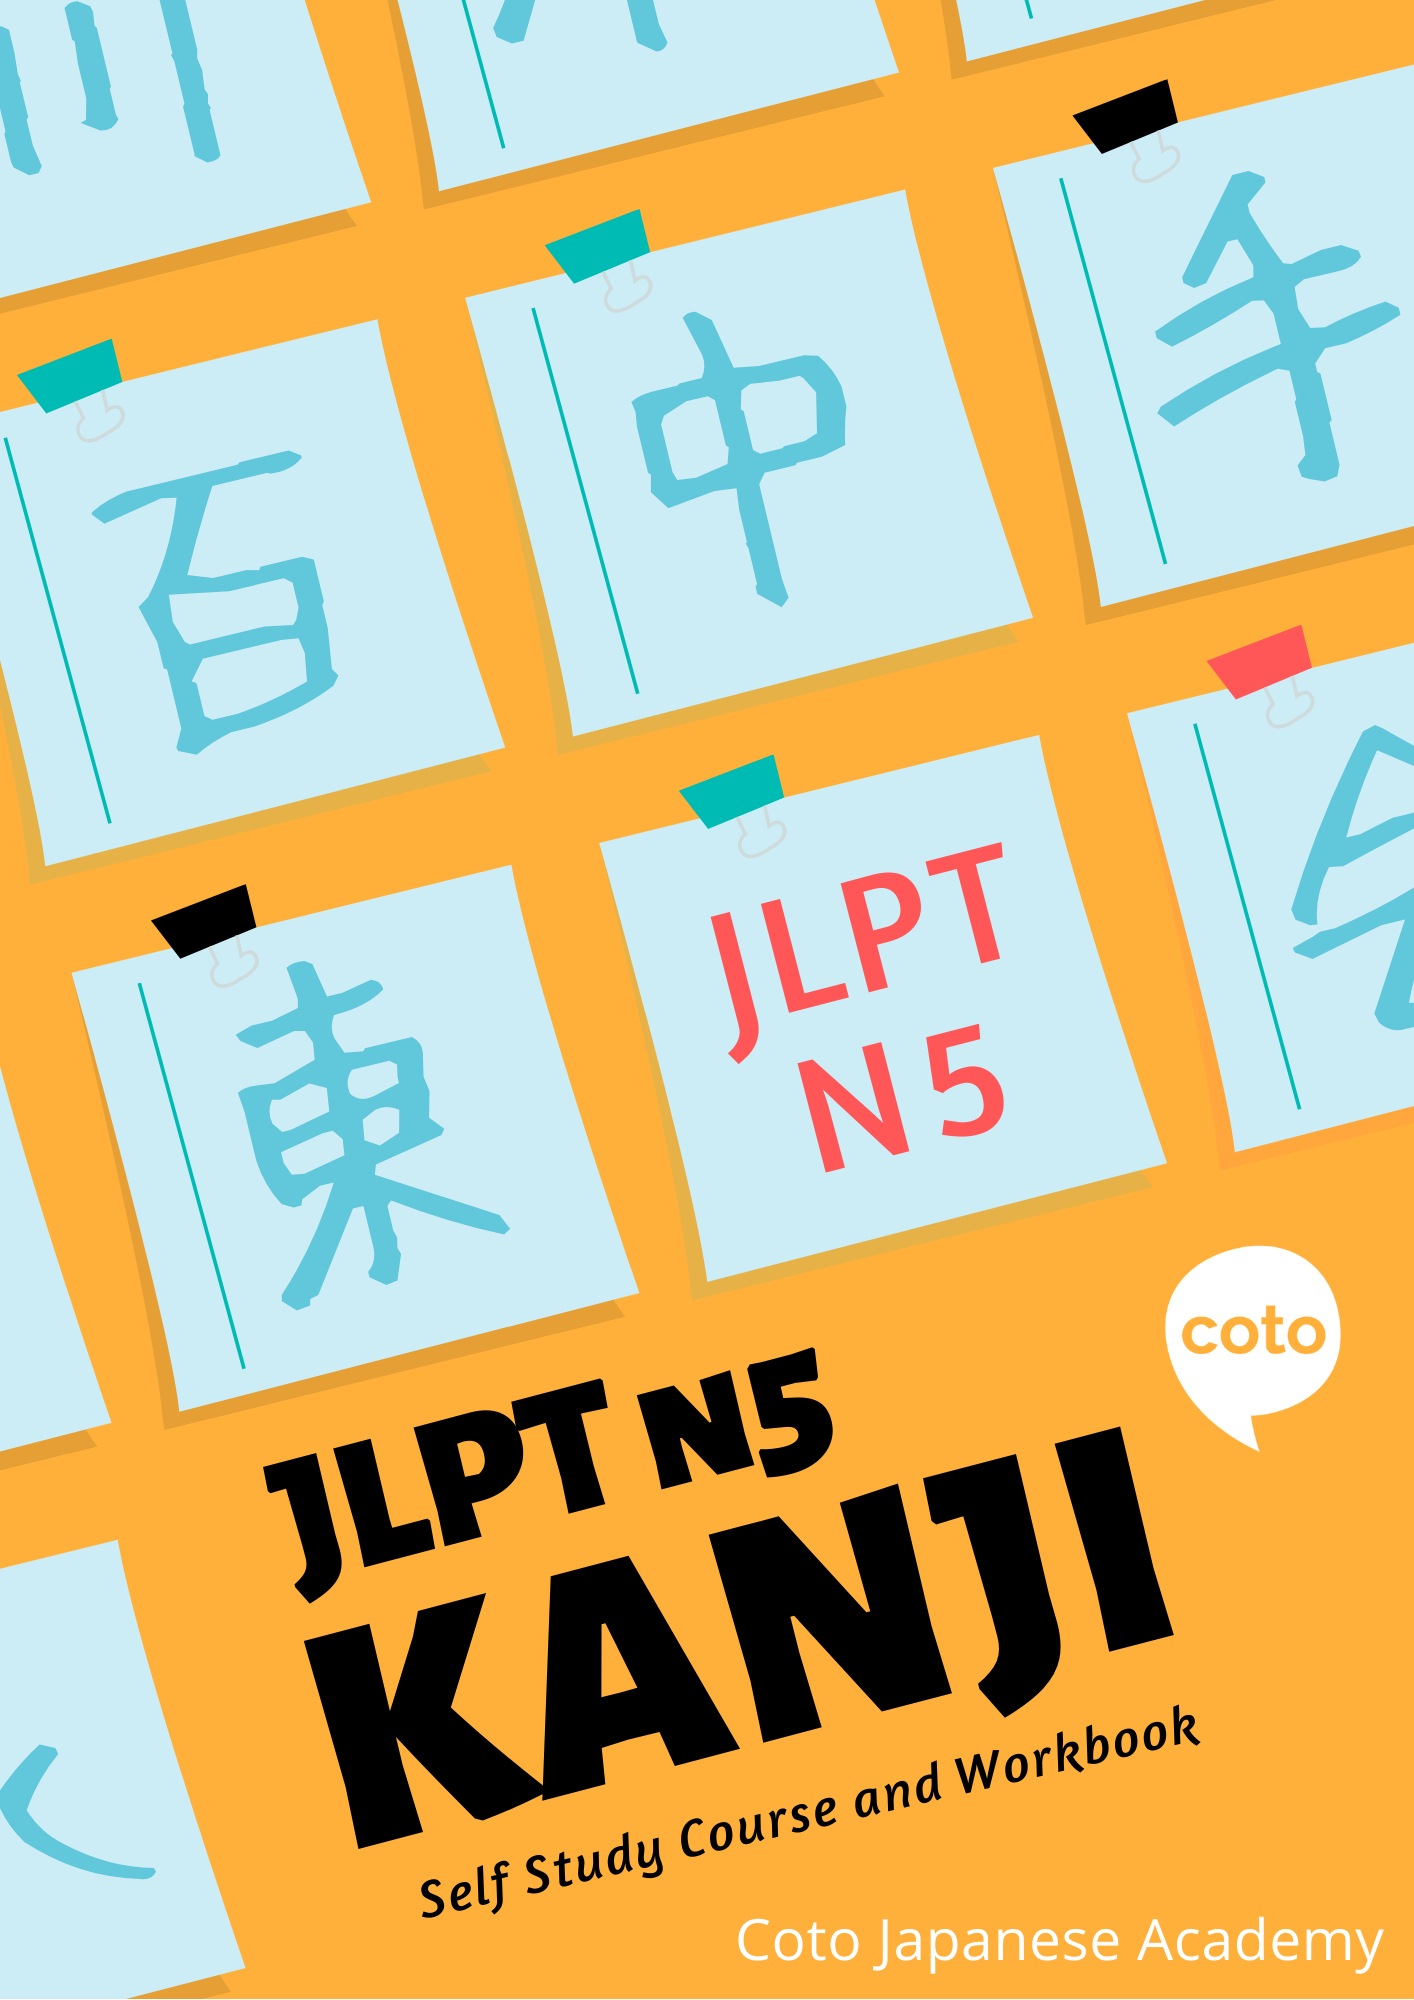 JLPT N5 Kanji Course (Quizzes, Workbook, Cheatsheet)